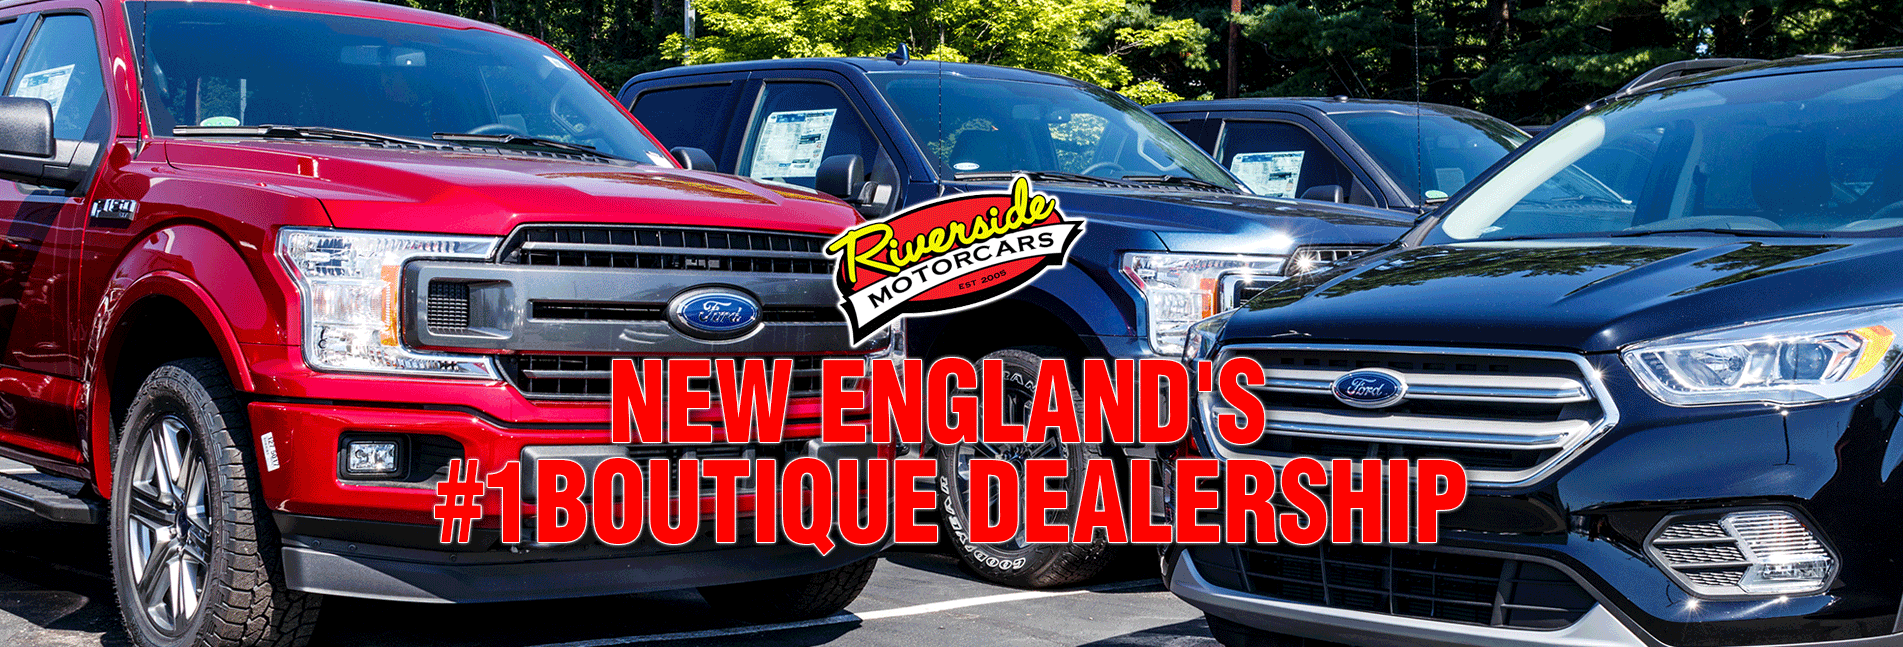 Used cars for sale in Naugatuck | Riverside Motorcars, LLC. Naugatuck Connecticut